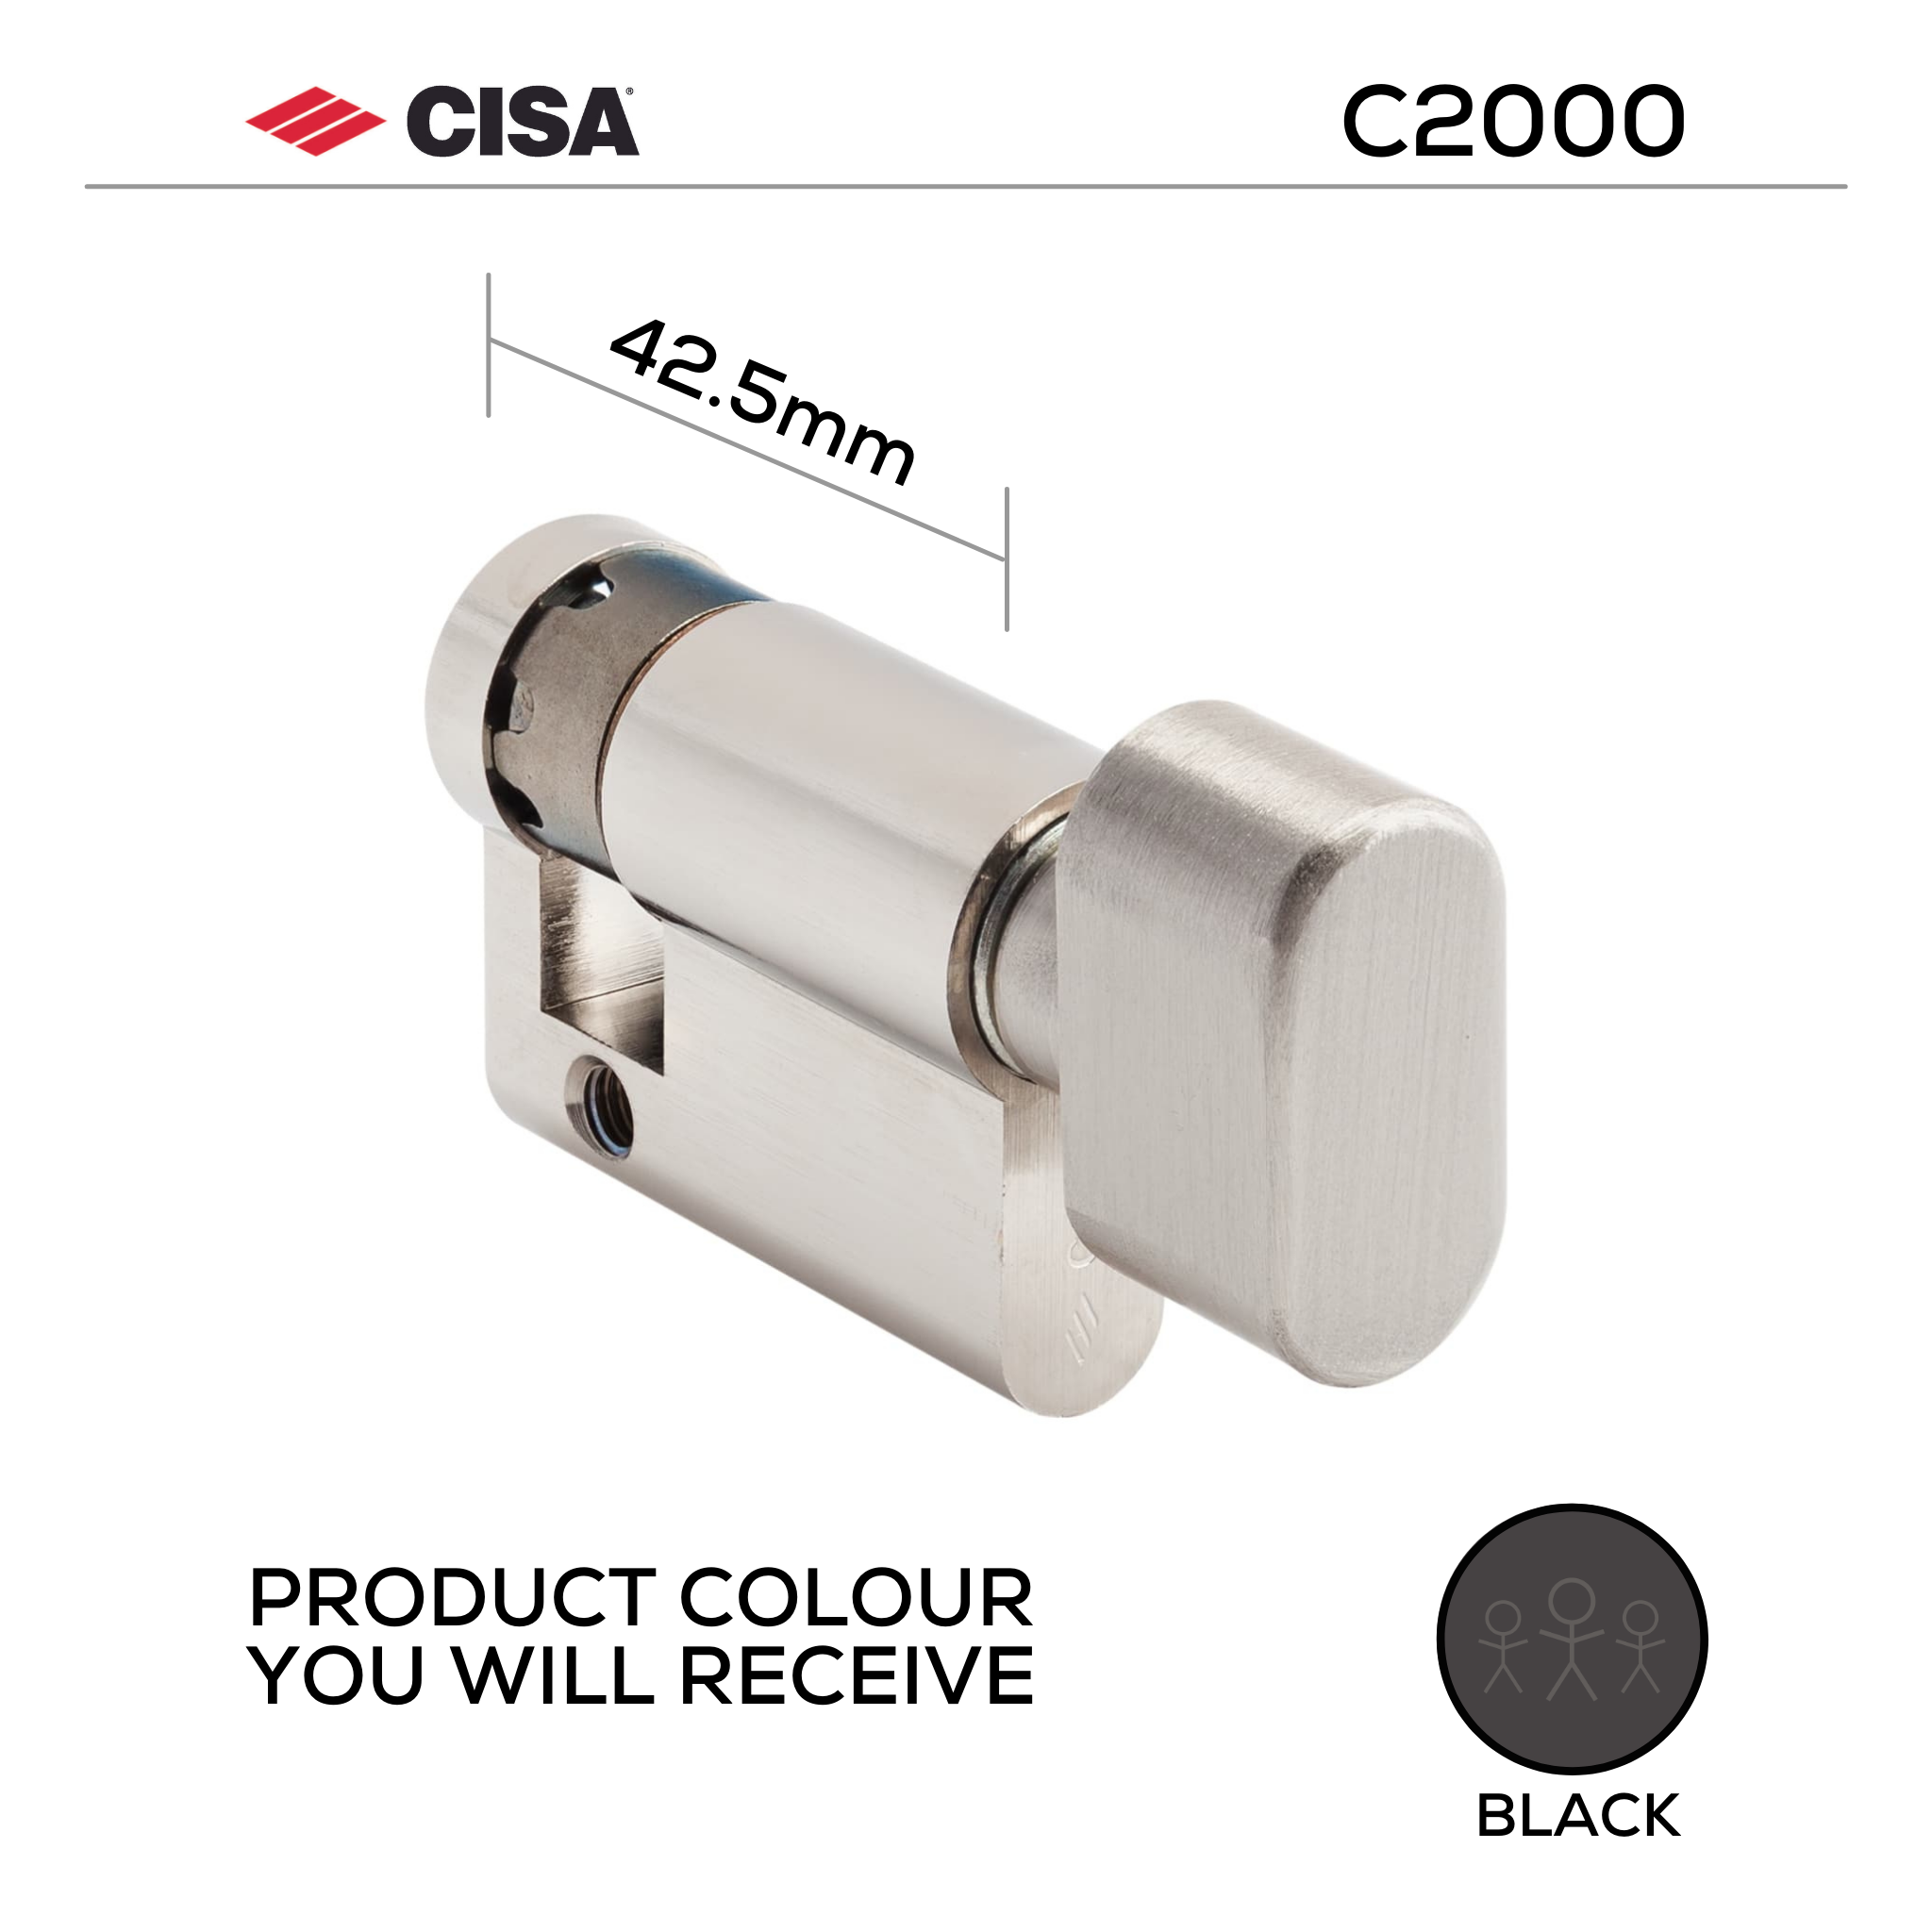 08559-09-00-BLK-KD, 42,5mm - 32.5/10, Half (Single Cylinder), C2000, Thumbturn, Keyed to Differ (Standard), Black, CISA